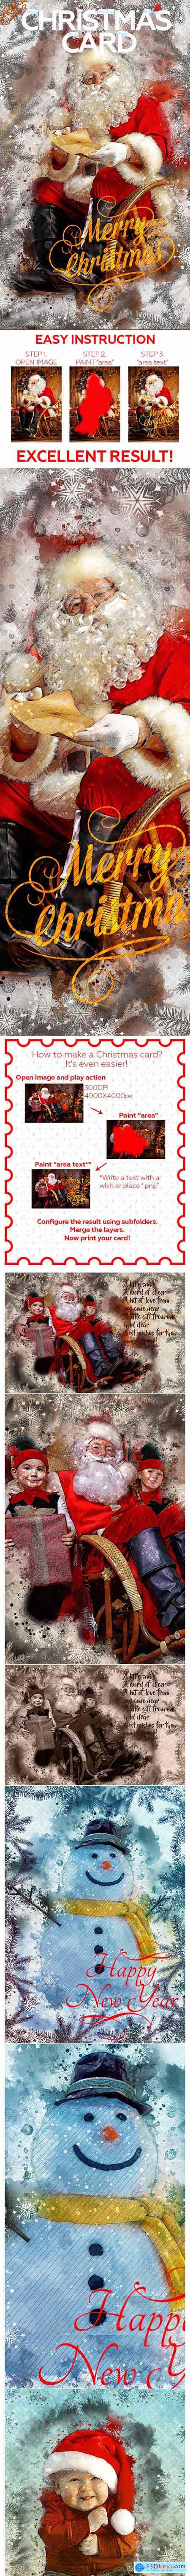 Christmas Card Photoshop Action 21041258